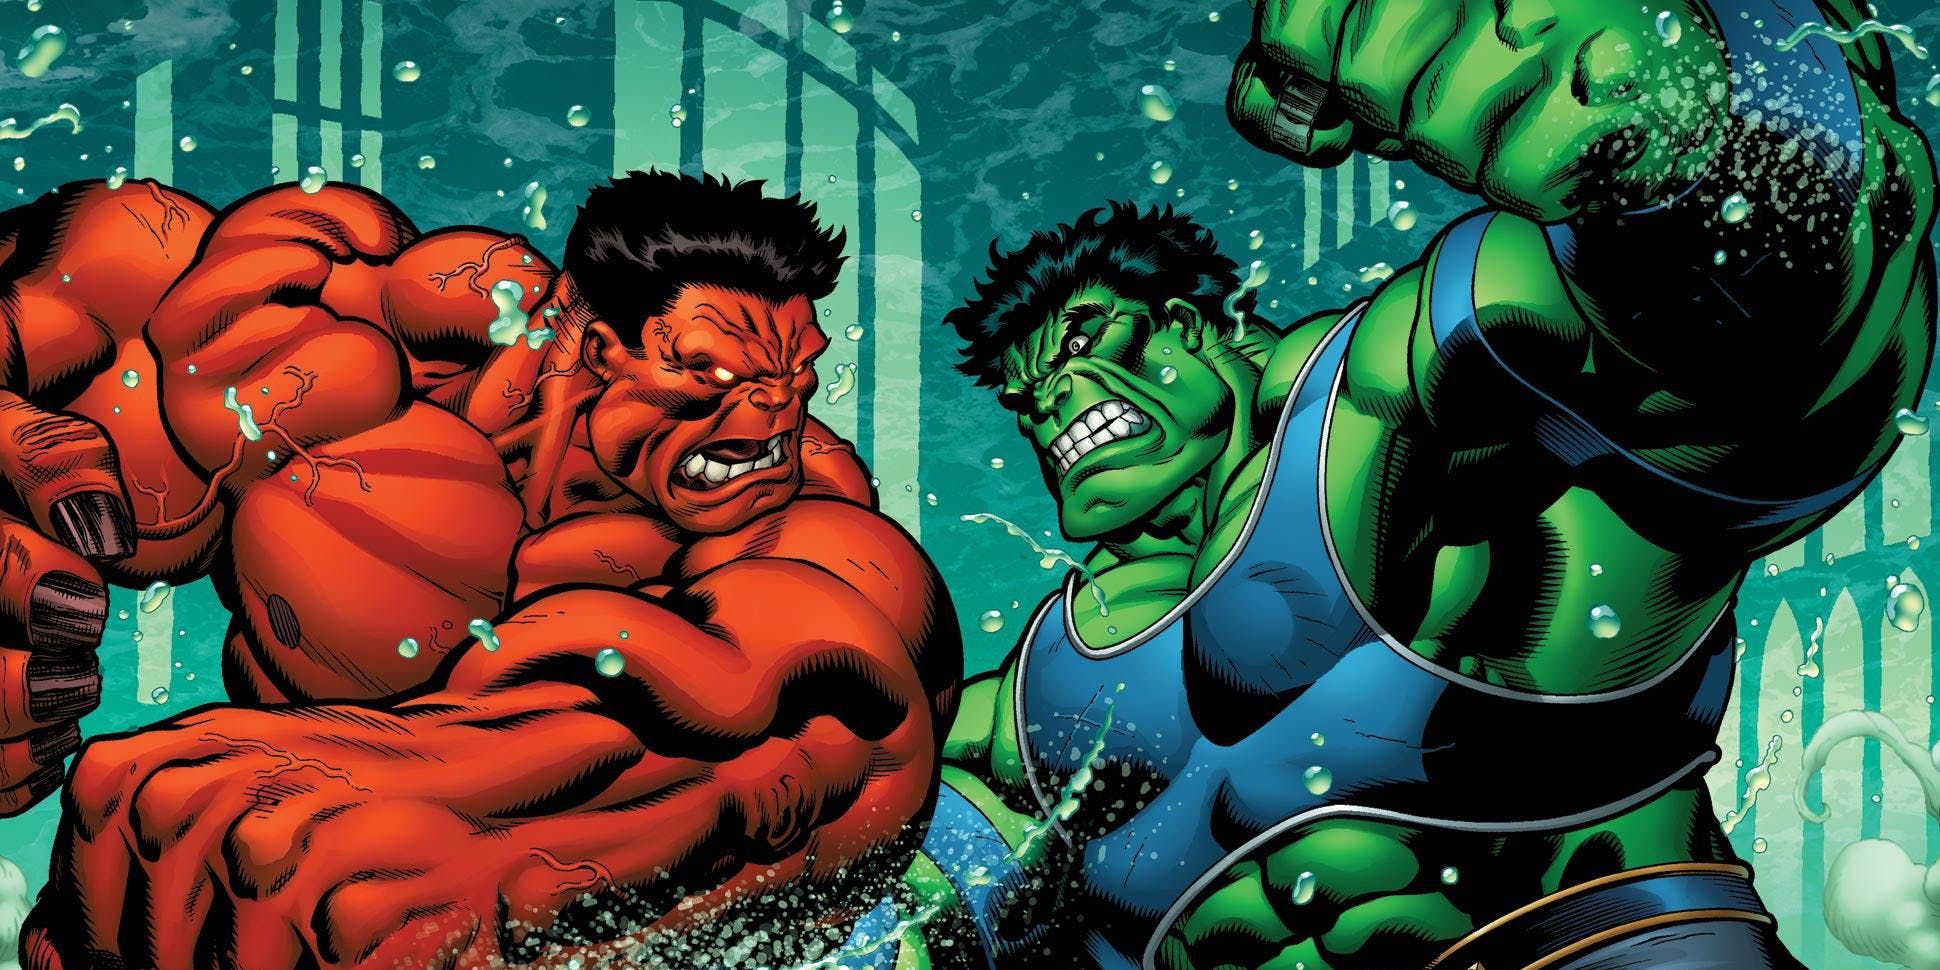 Marvel Comics' Red Hulk fighting the Hulk